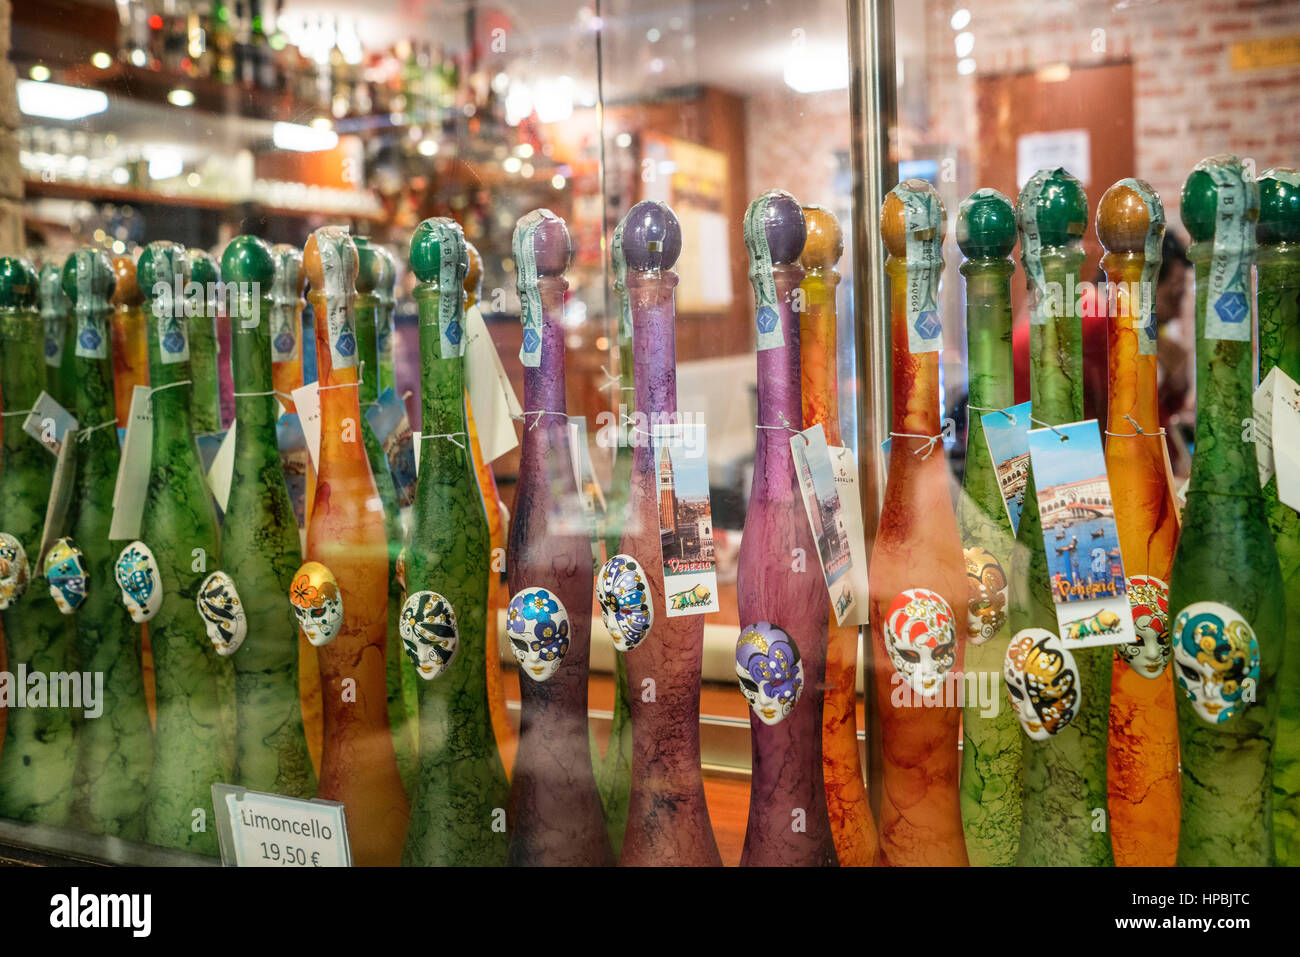 Raw of Limoncello liqueur bottles, Venice, Italy Stock Photo